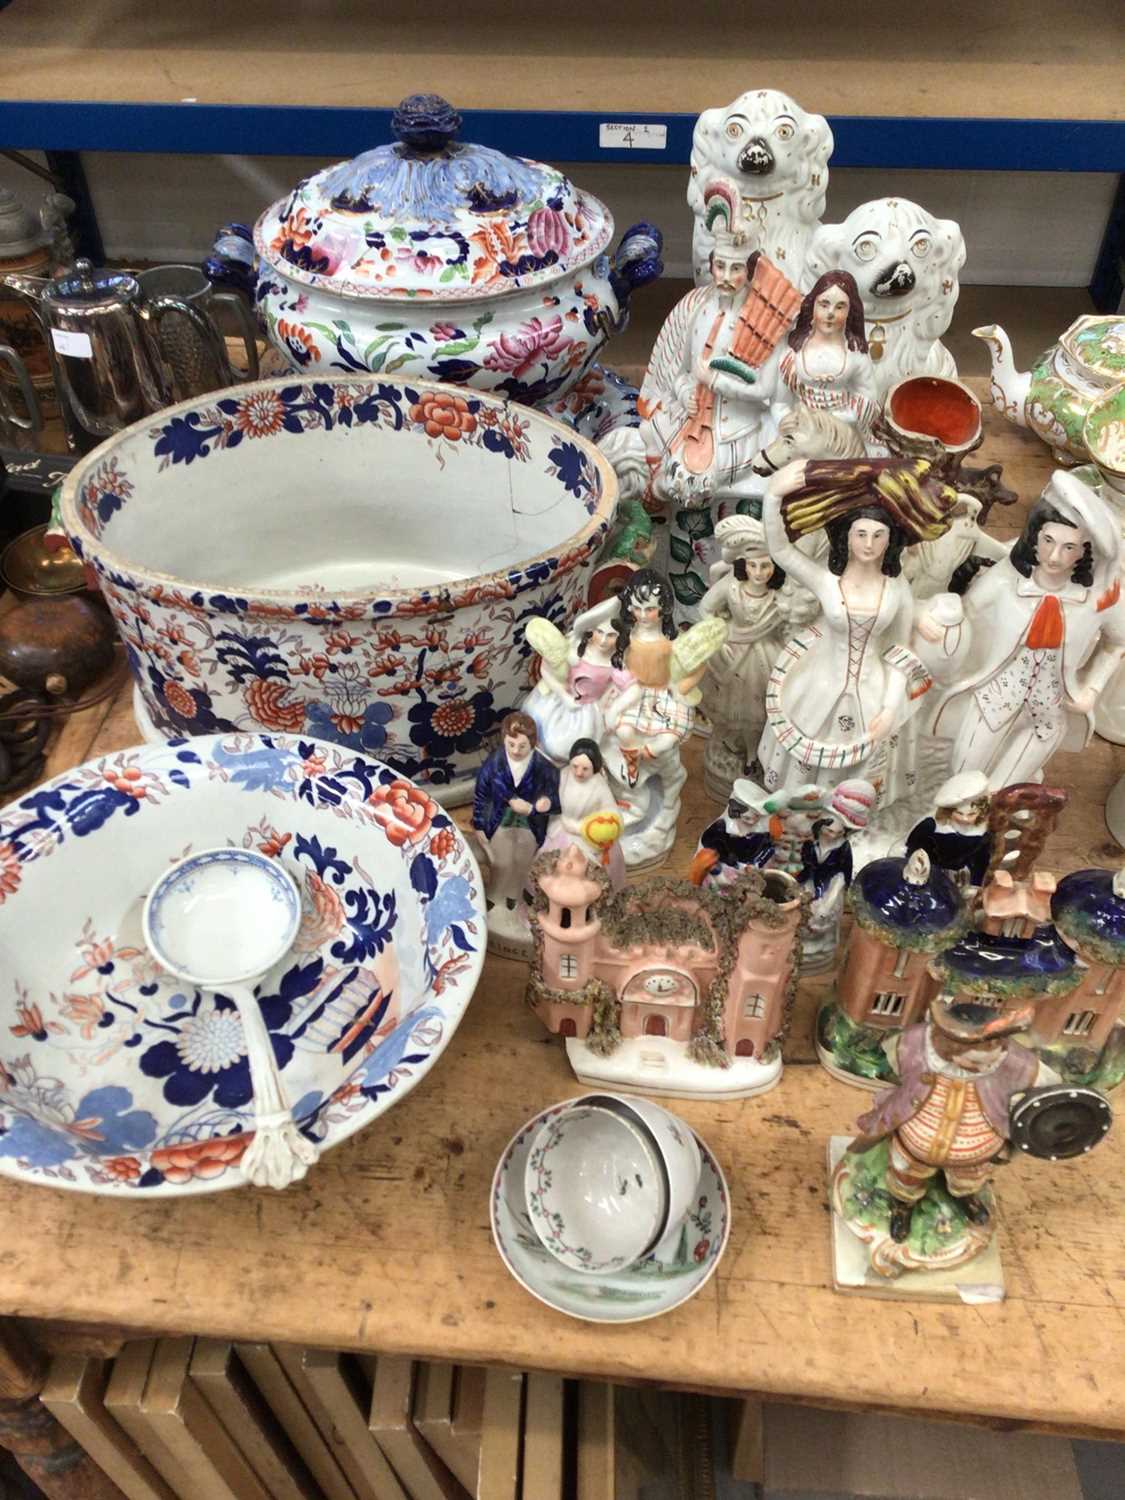 Lot 42 - Group of 19th century English ceramics, including large Mason's Imari tureen, bowl, etc, Staffordshire figures, pair of spaniels, pearlware figure of Falstaff, etc